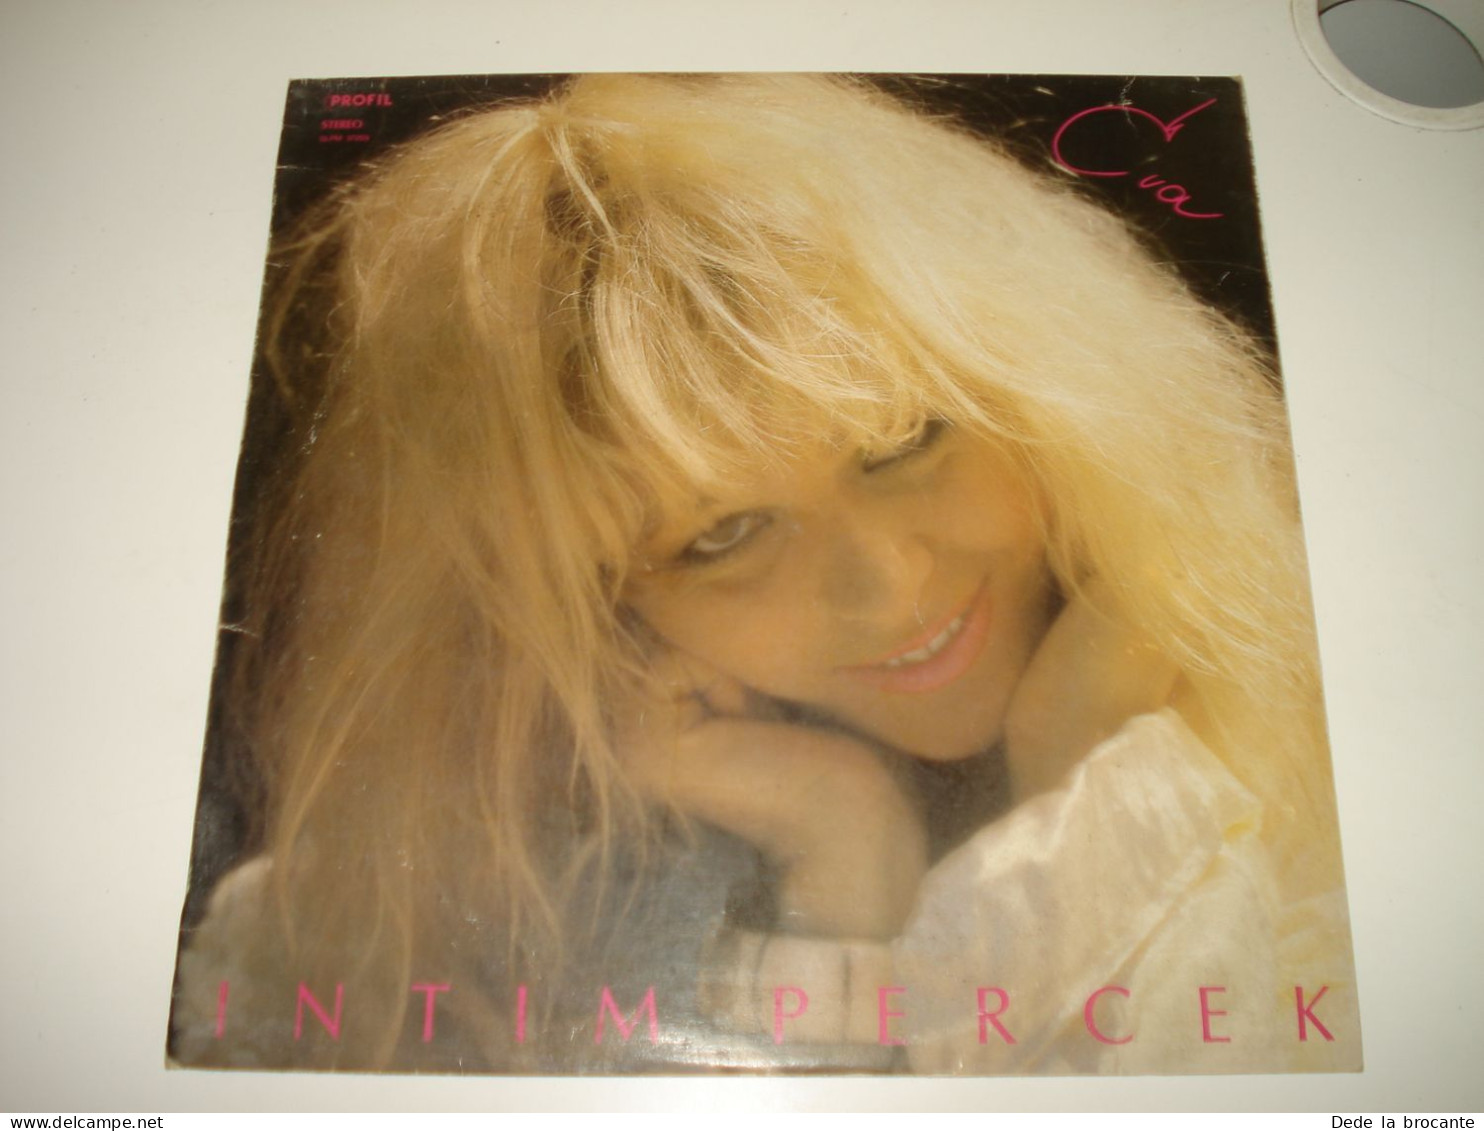 B12 / Csepregi Éva – Intim Percek - LP – Profil - SLPM 37259 - Hung 1989  NM/VG+ - Disco, Pop